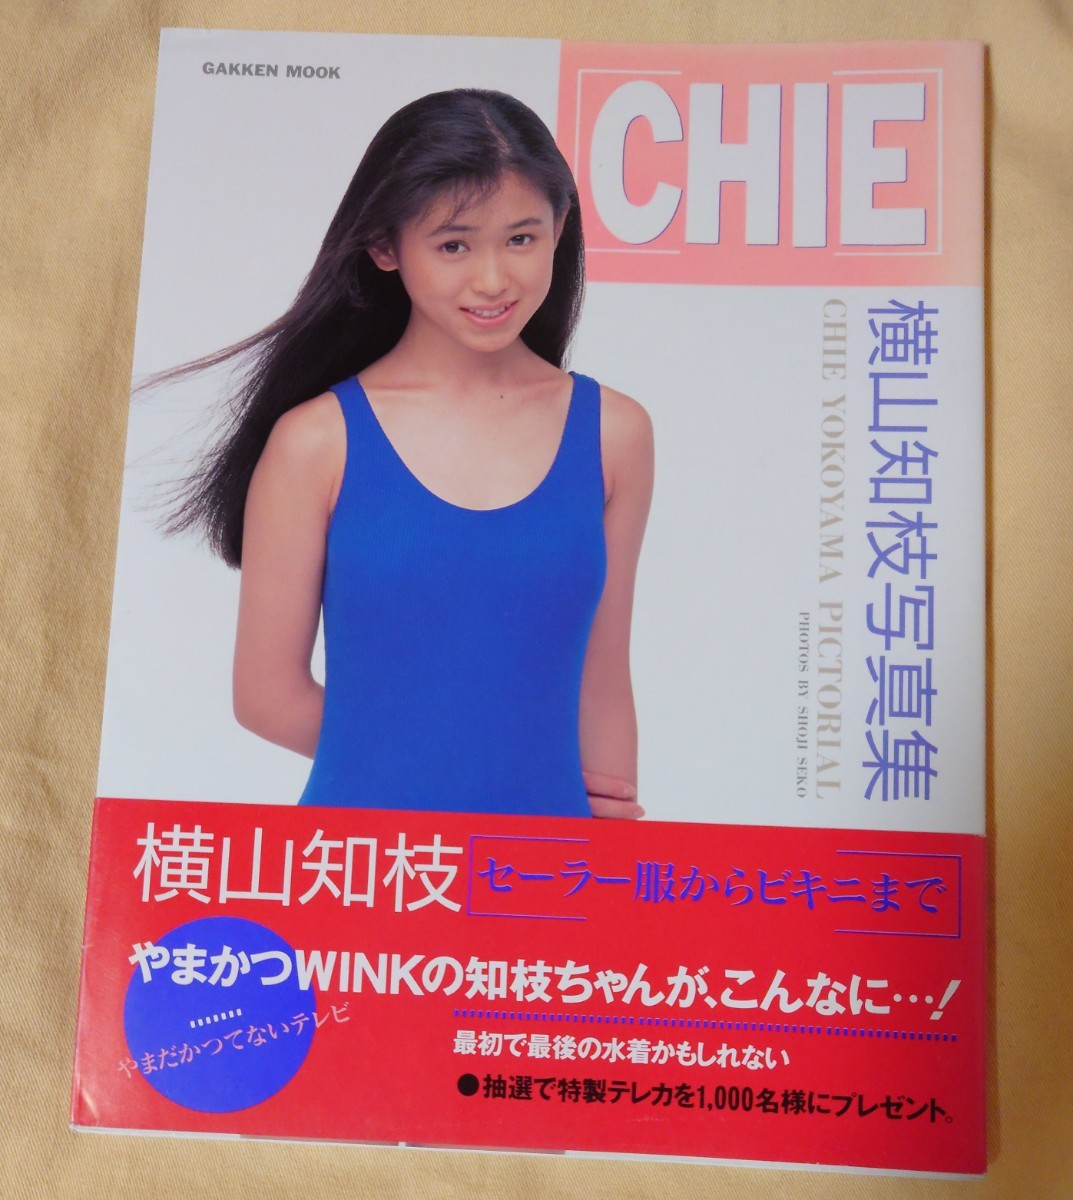  Yokoyama Chie фотоальбом CHIE. еще ... нет телевизор .. и WINK